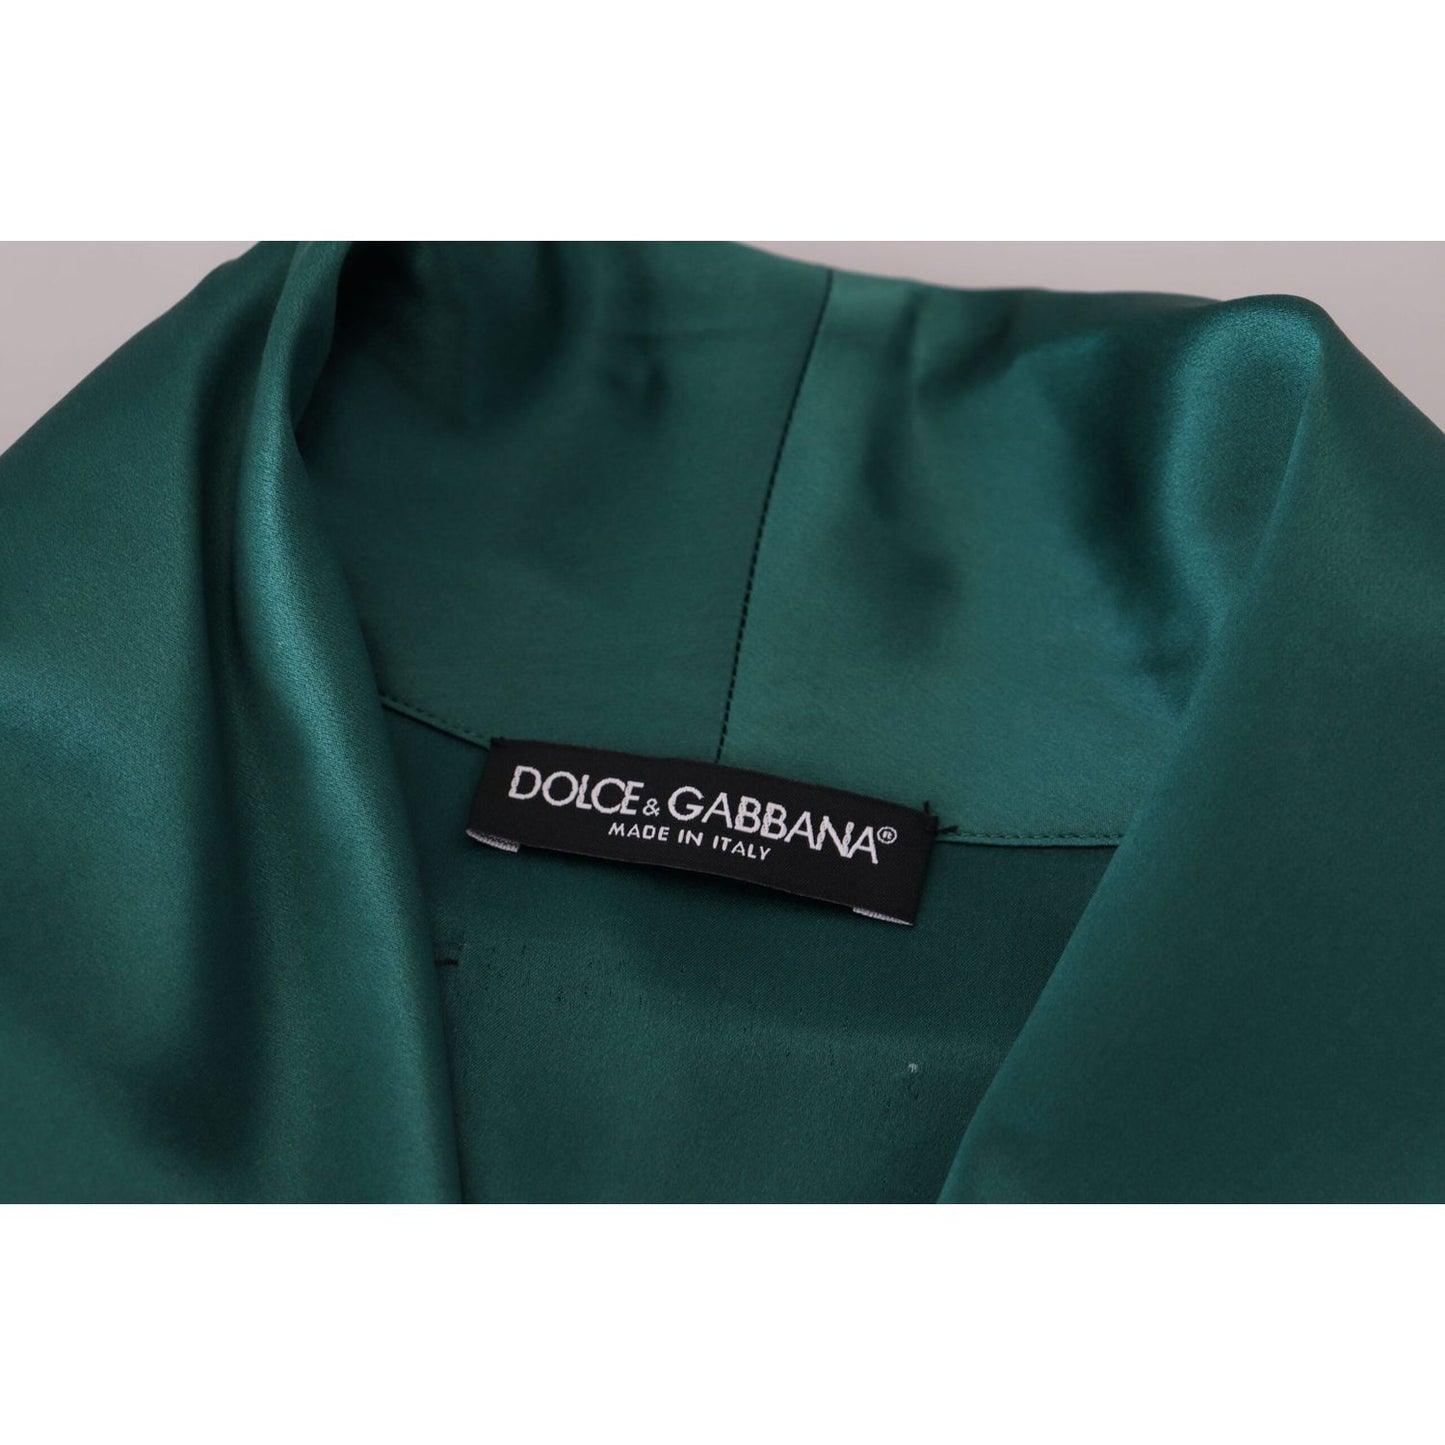 Dolce & Gabbana Elegant Silk Robe in Lush Green green-silk-waist-belt-robe-sleepwear IMG_4013-scaled-0259b01f-d32.jpg